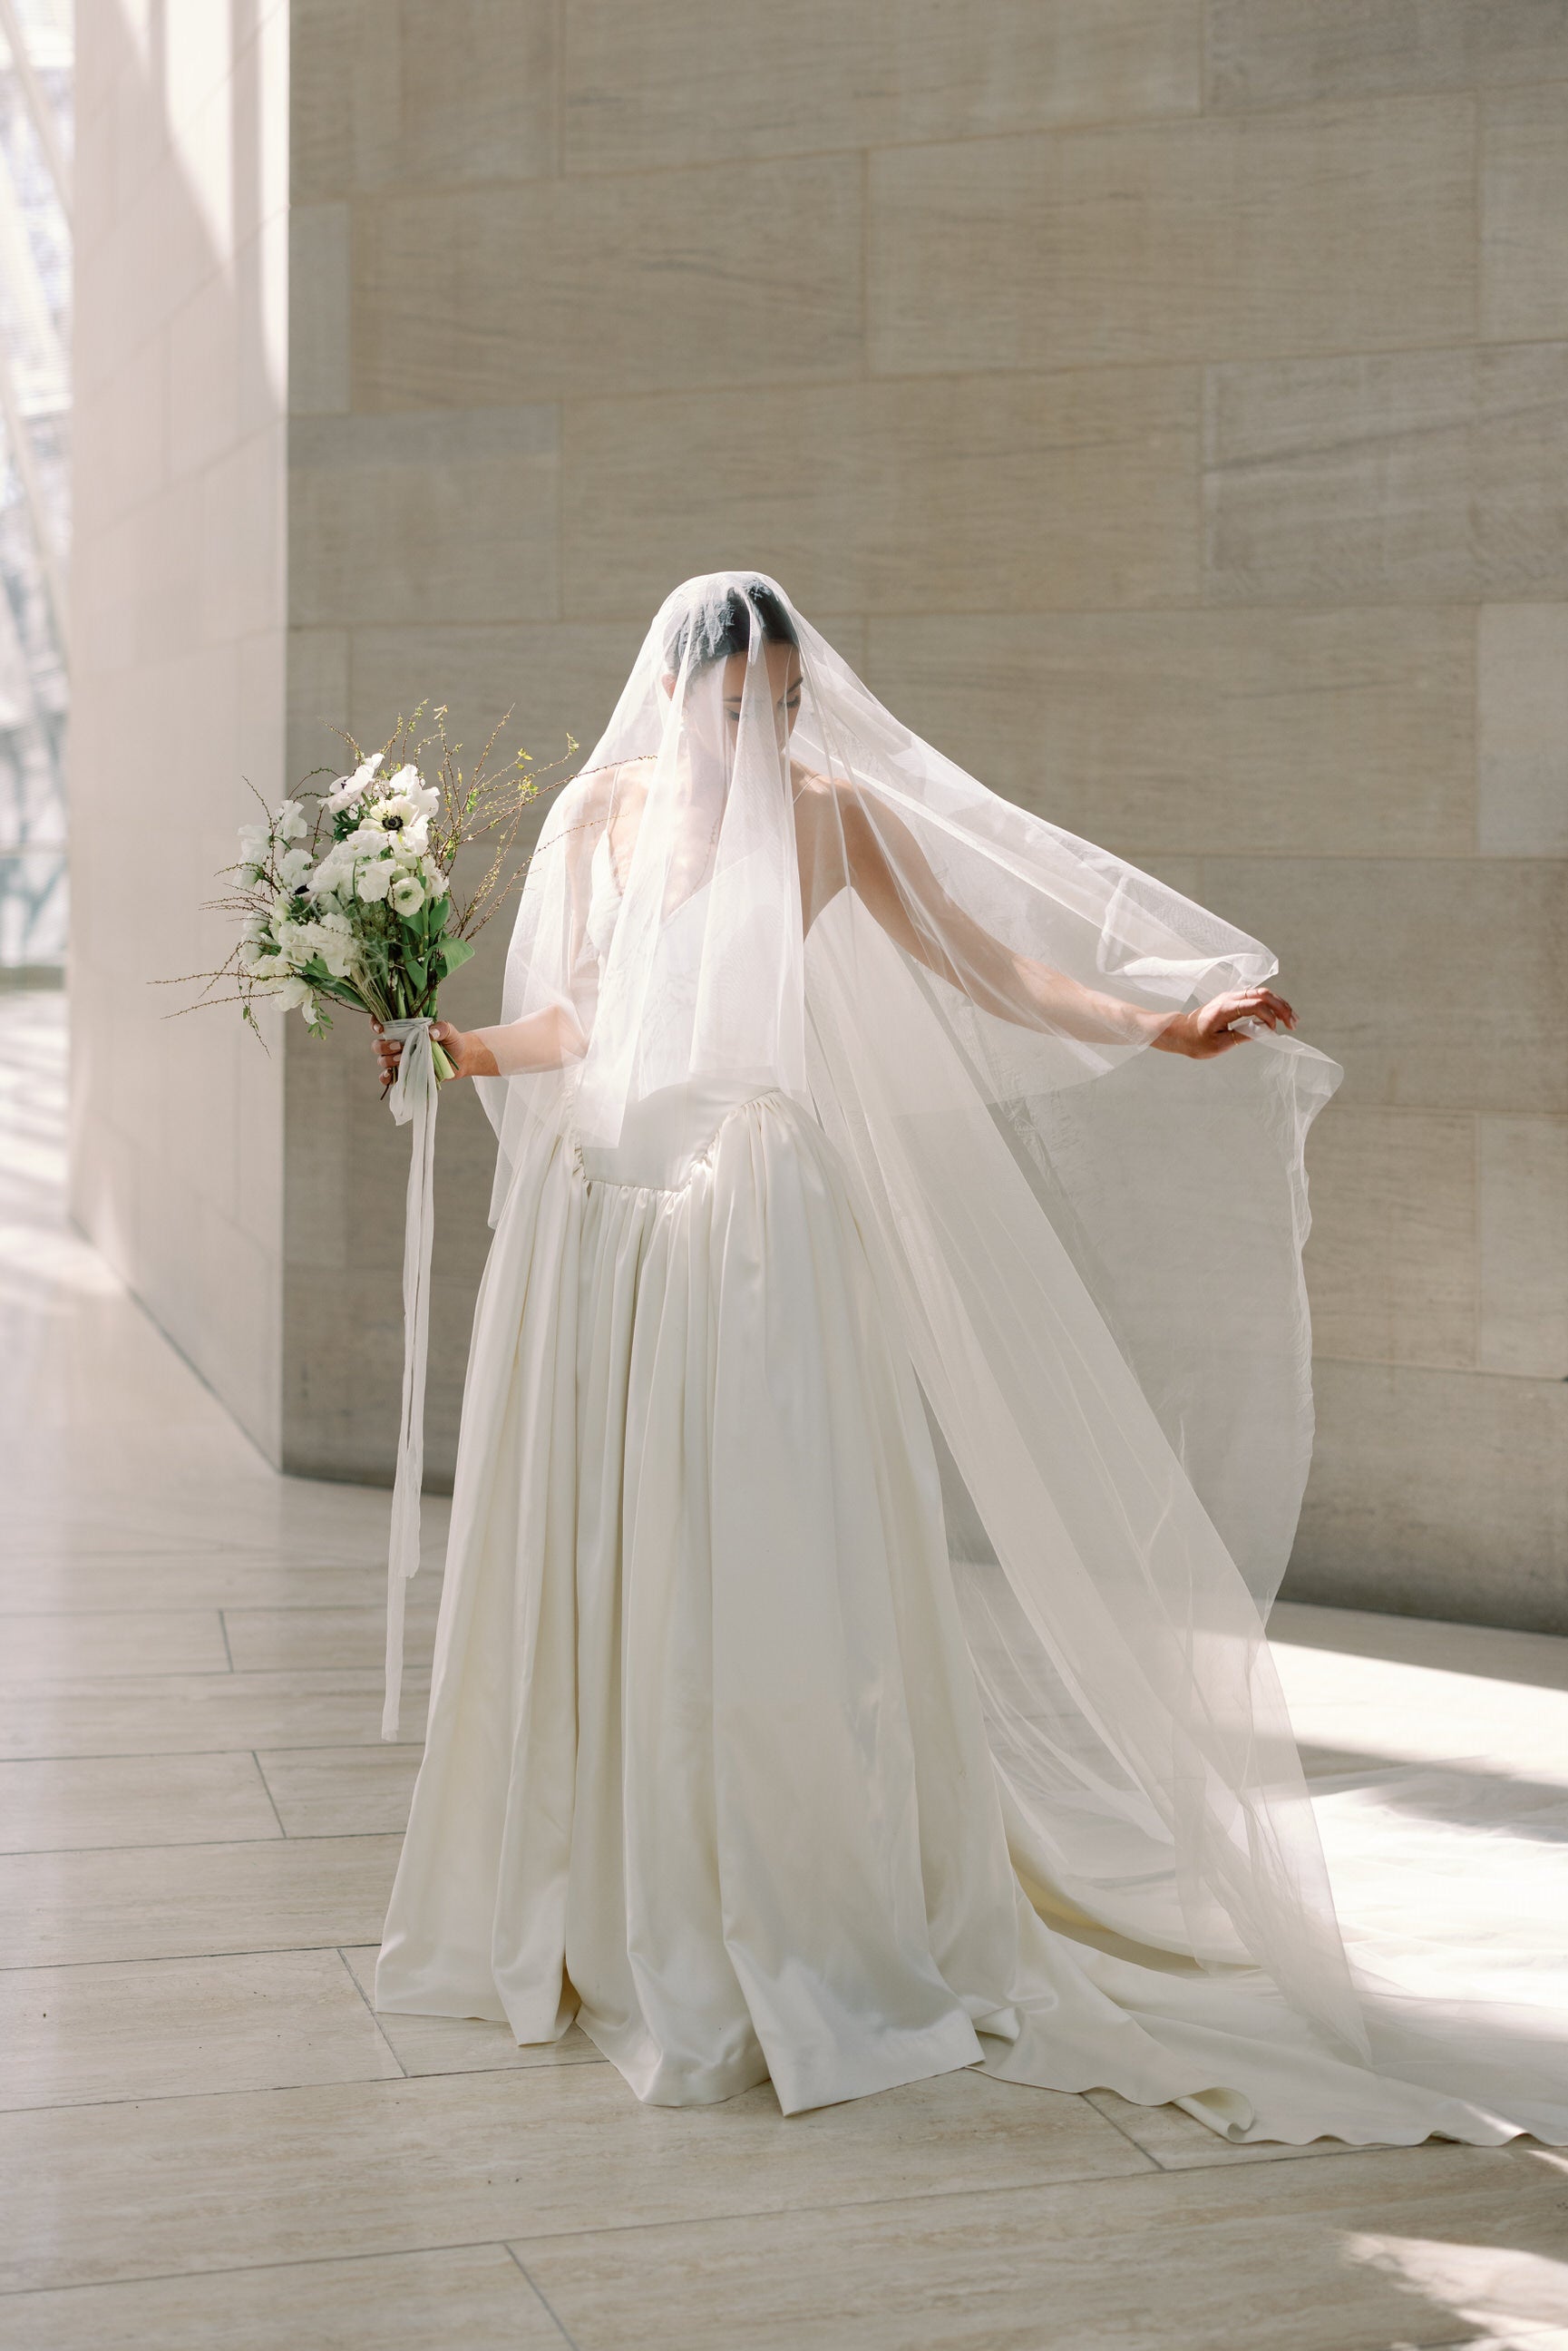 Bridal Guide - Wedding Veils for the Modern and Elegant Bride